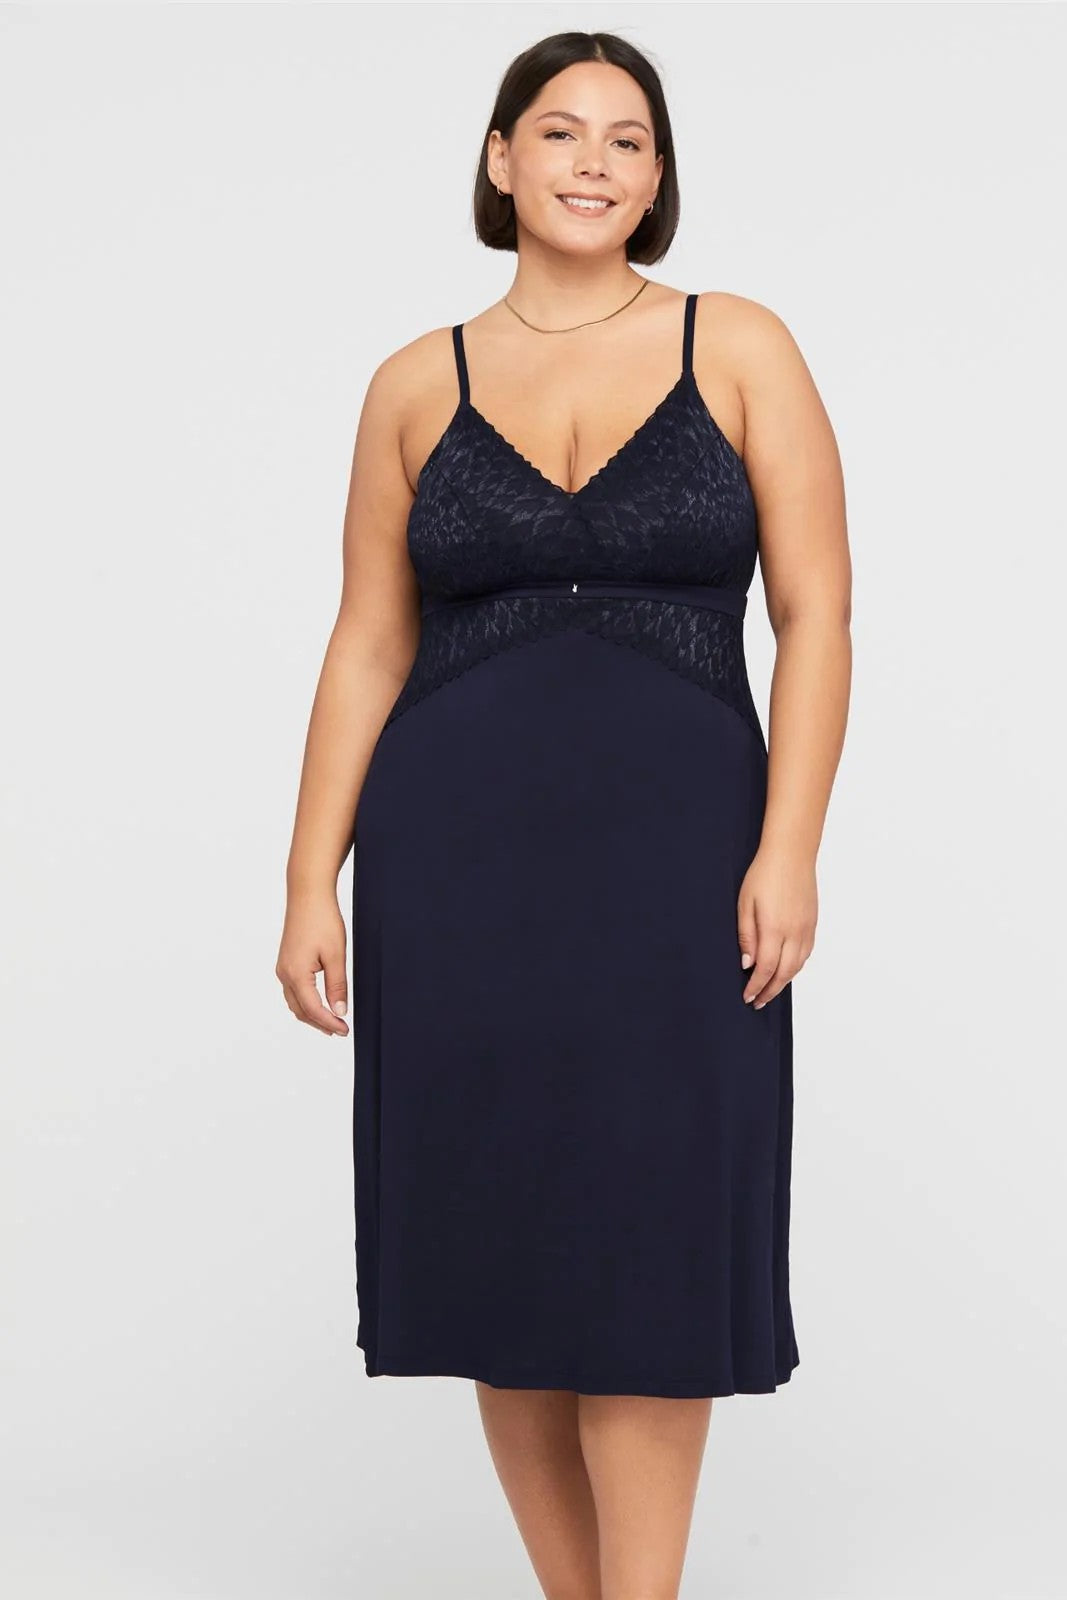 Wacoal Embrace Lace Chemise Semi Sheer Lightweight Nightdress Lingerie  Nightwear at  Women's Clothing store